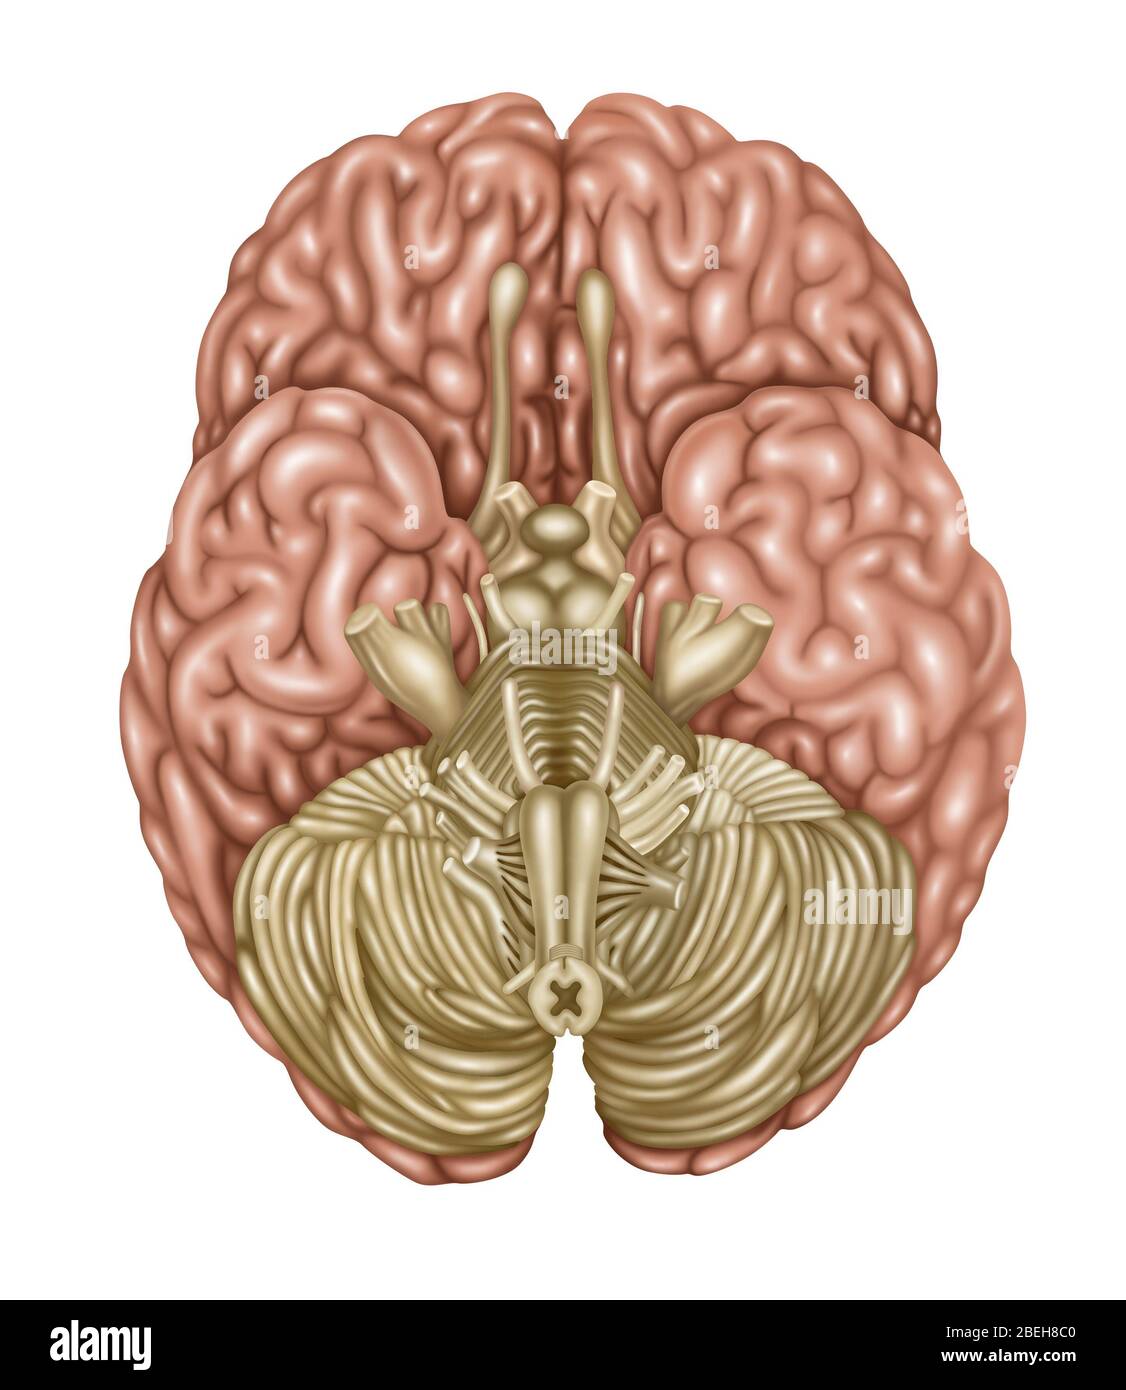 Brain Anatomy, Inferior View, Illustration Stock Photo